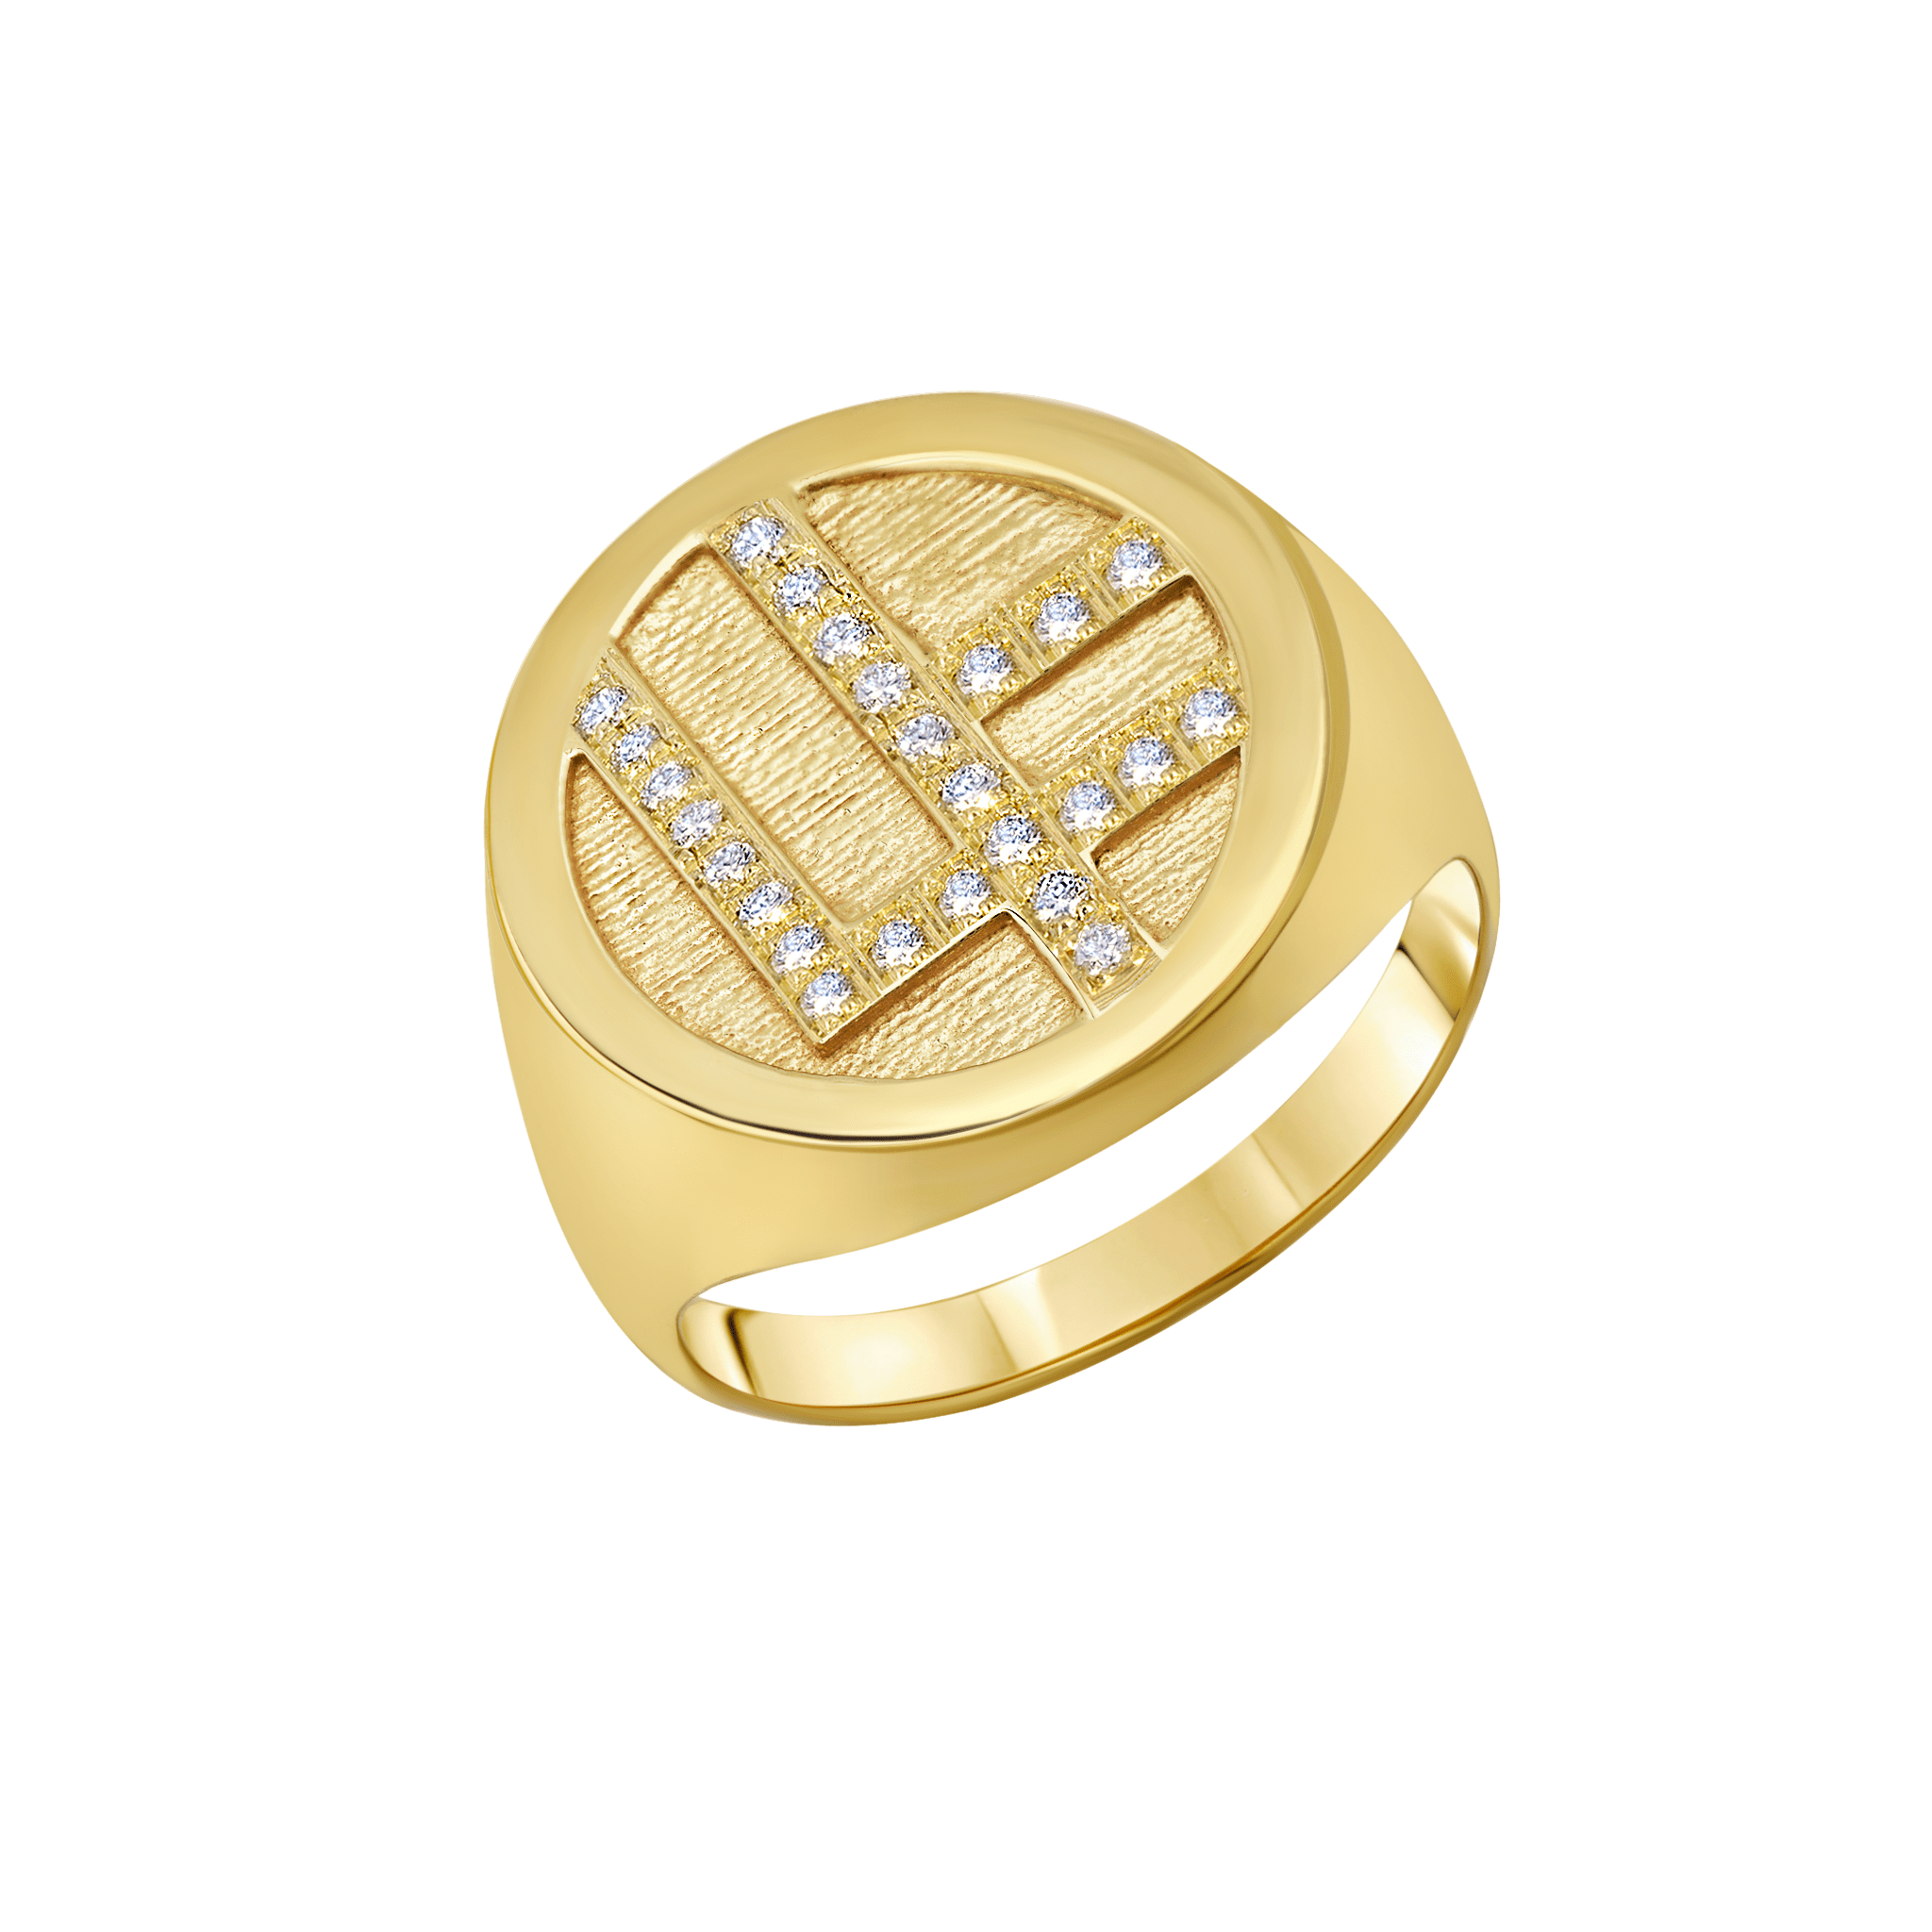 Medallion Rings with Center White Pavé Diamonds